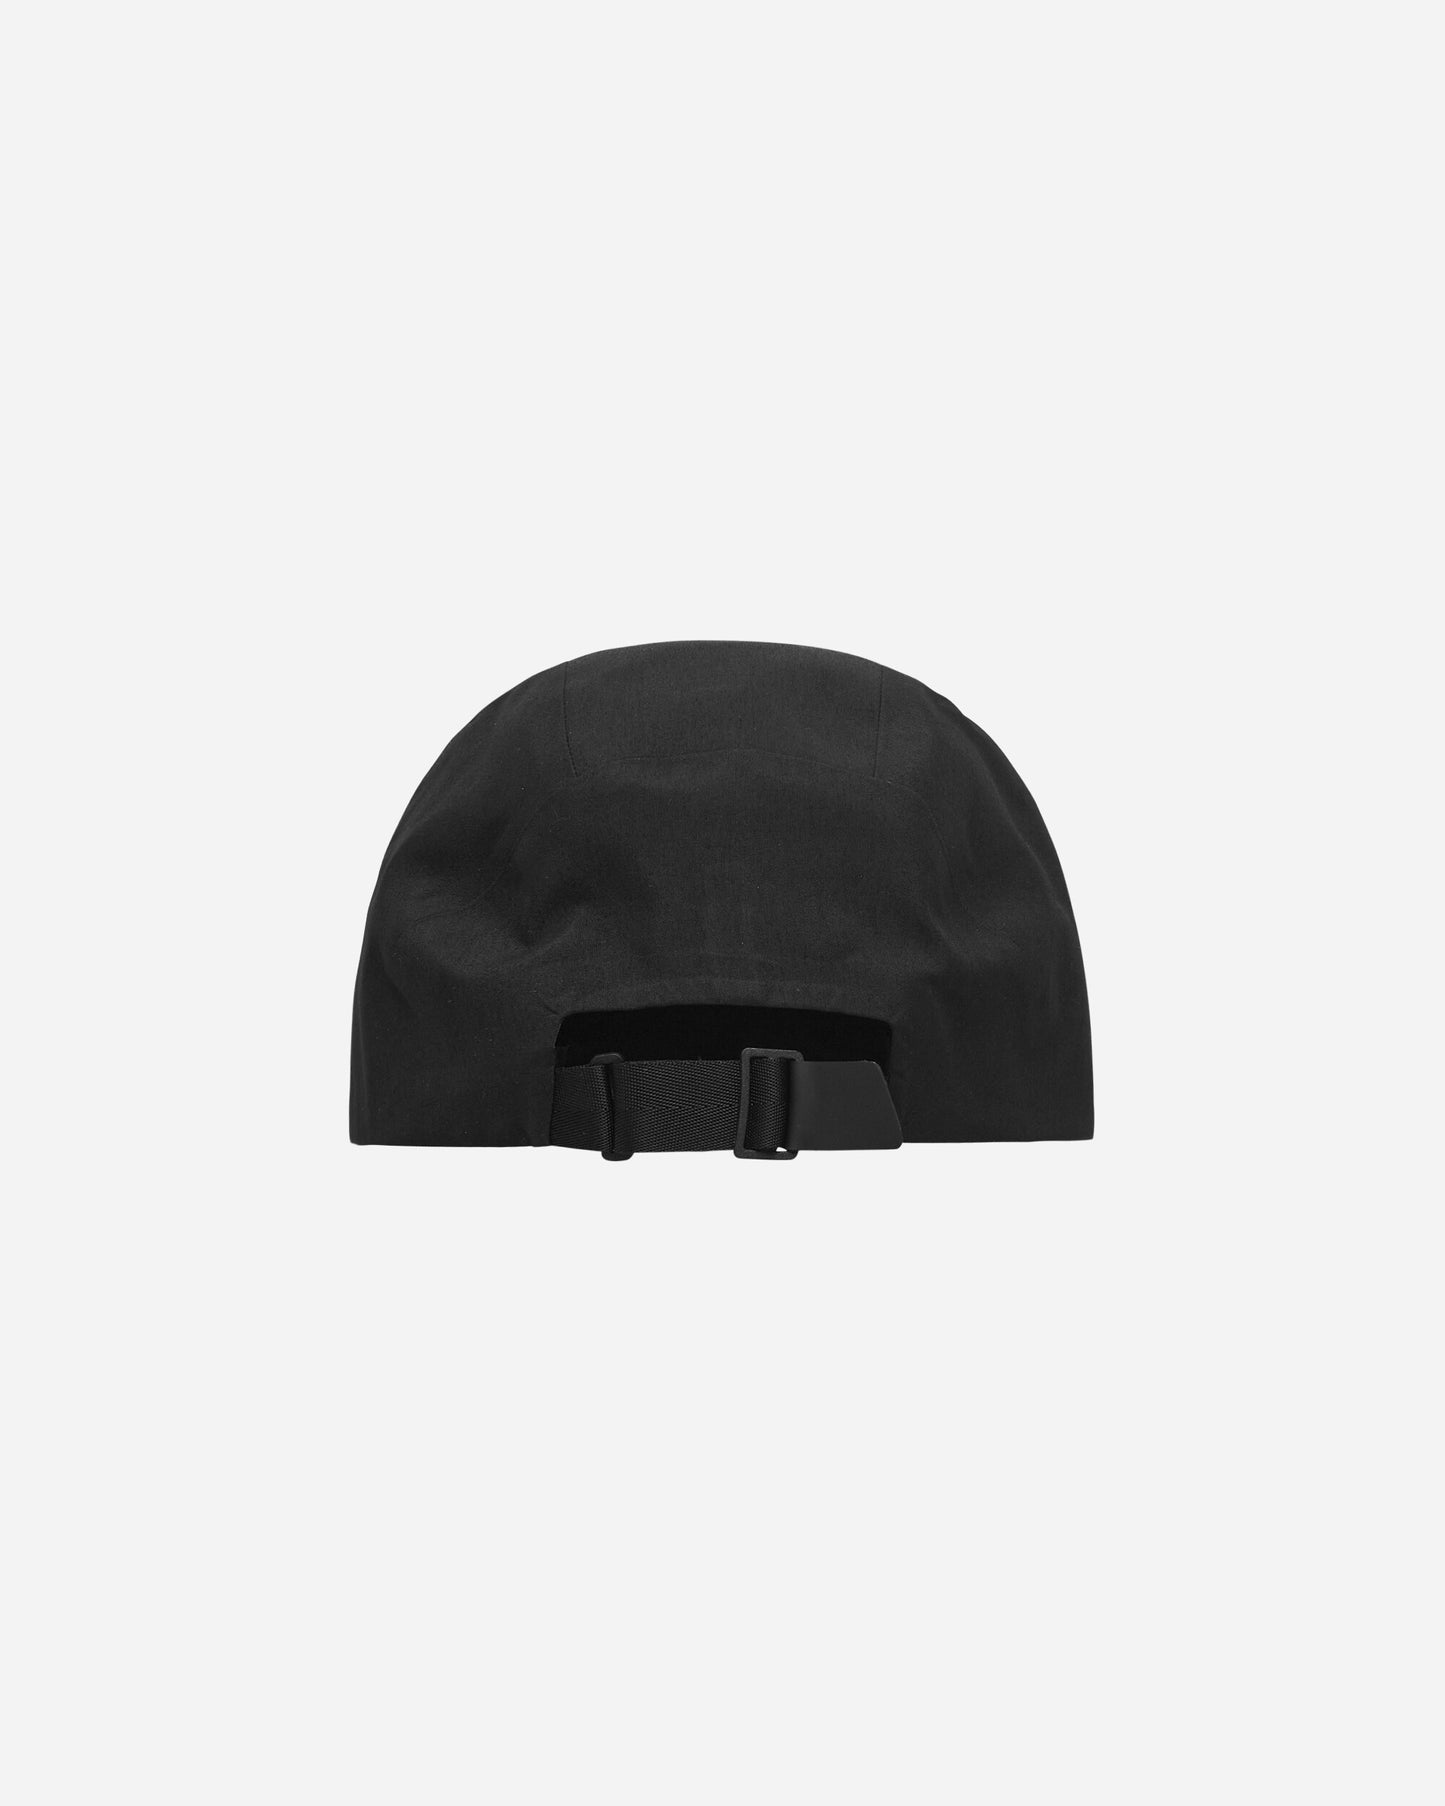 Arc'teryx Veilance Stealth Cap Black Hats Caps X000004685 BLACK